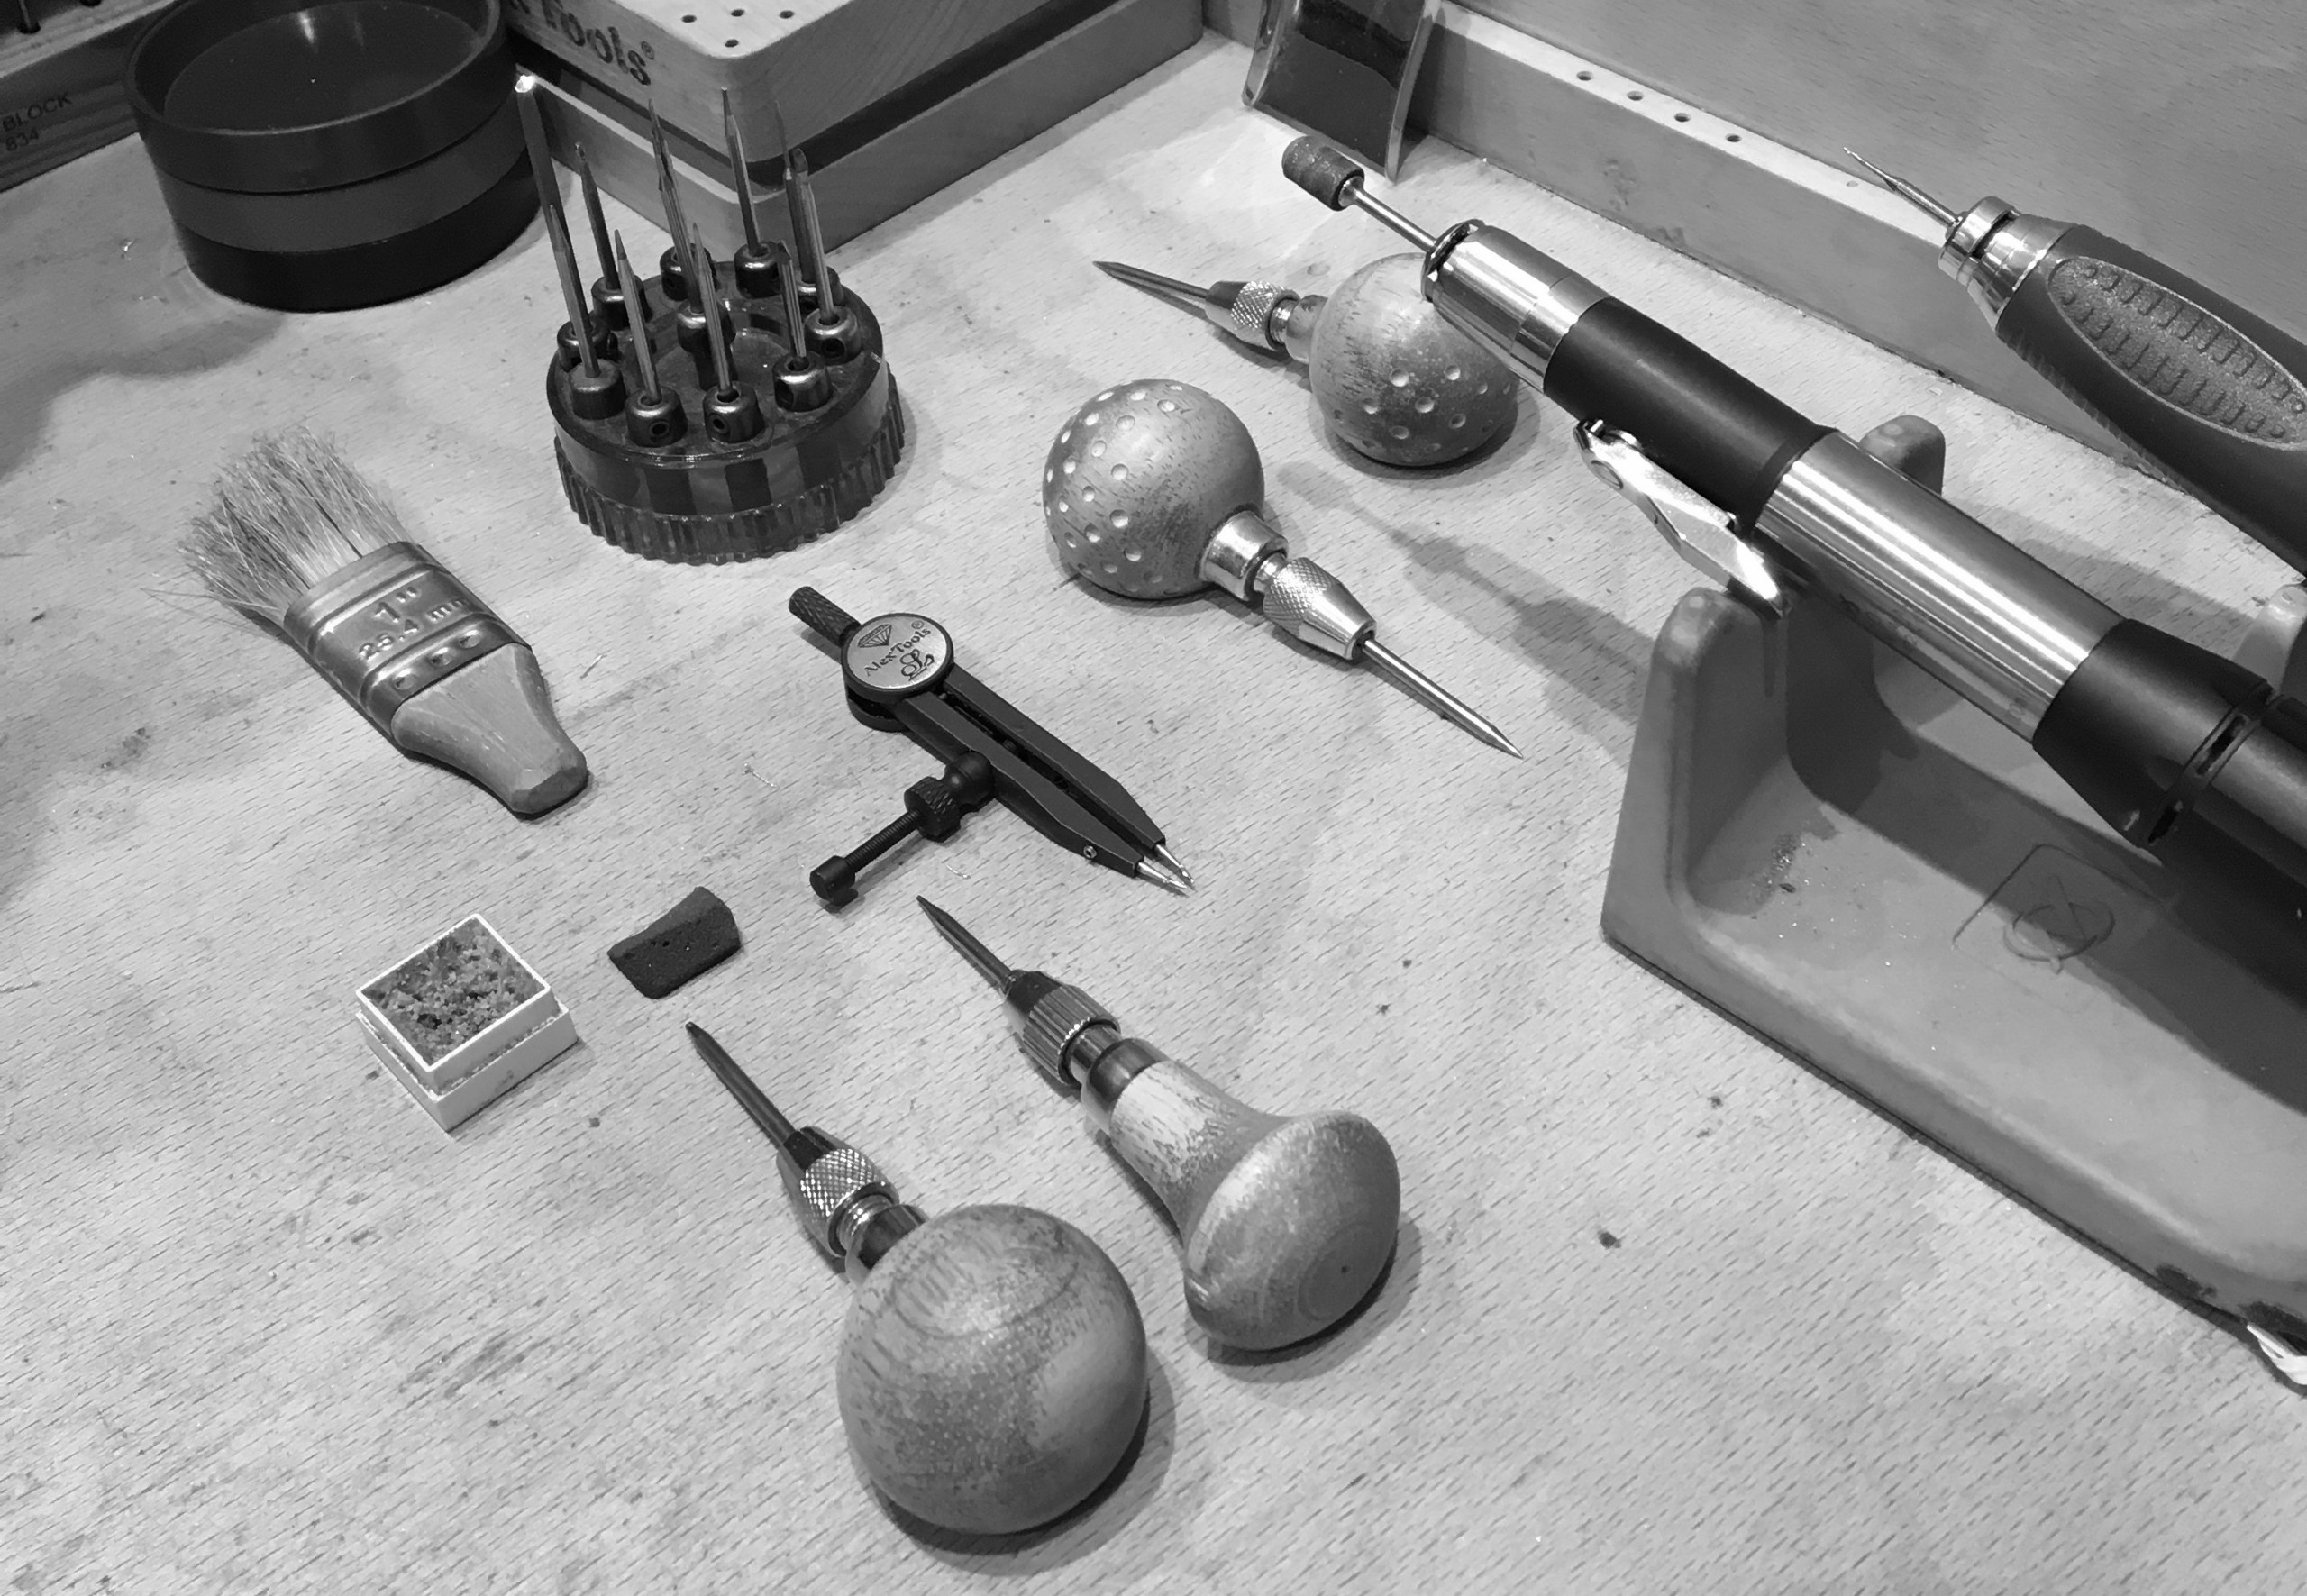 Jeweller's diamond setting tools on workbench